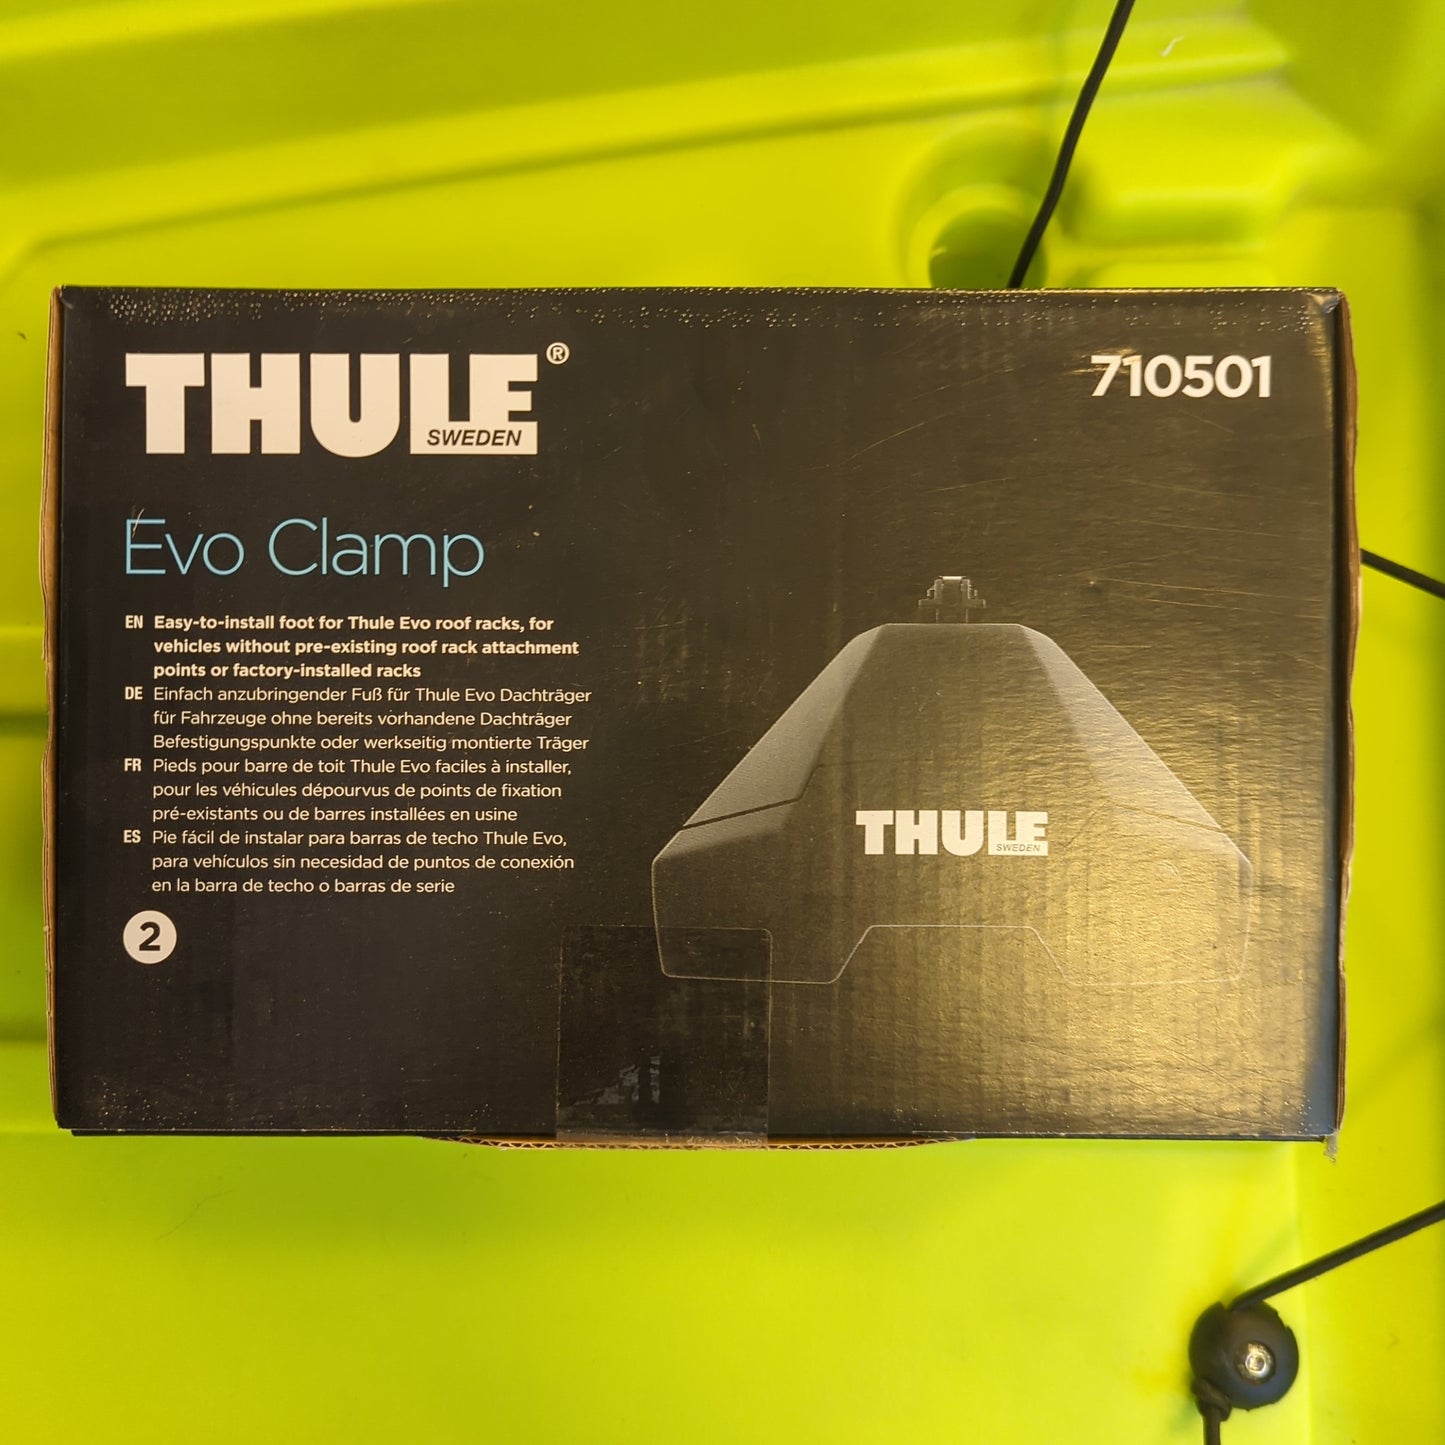 Thule EVO Clamp #710501